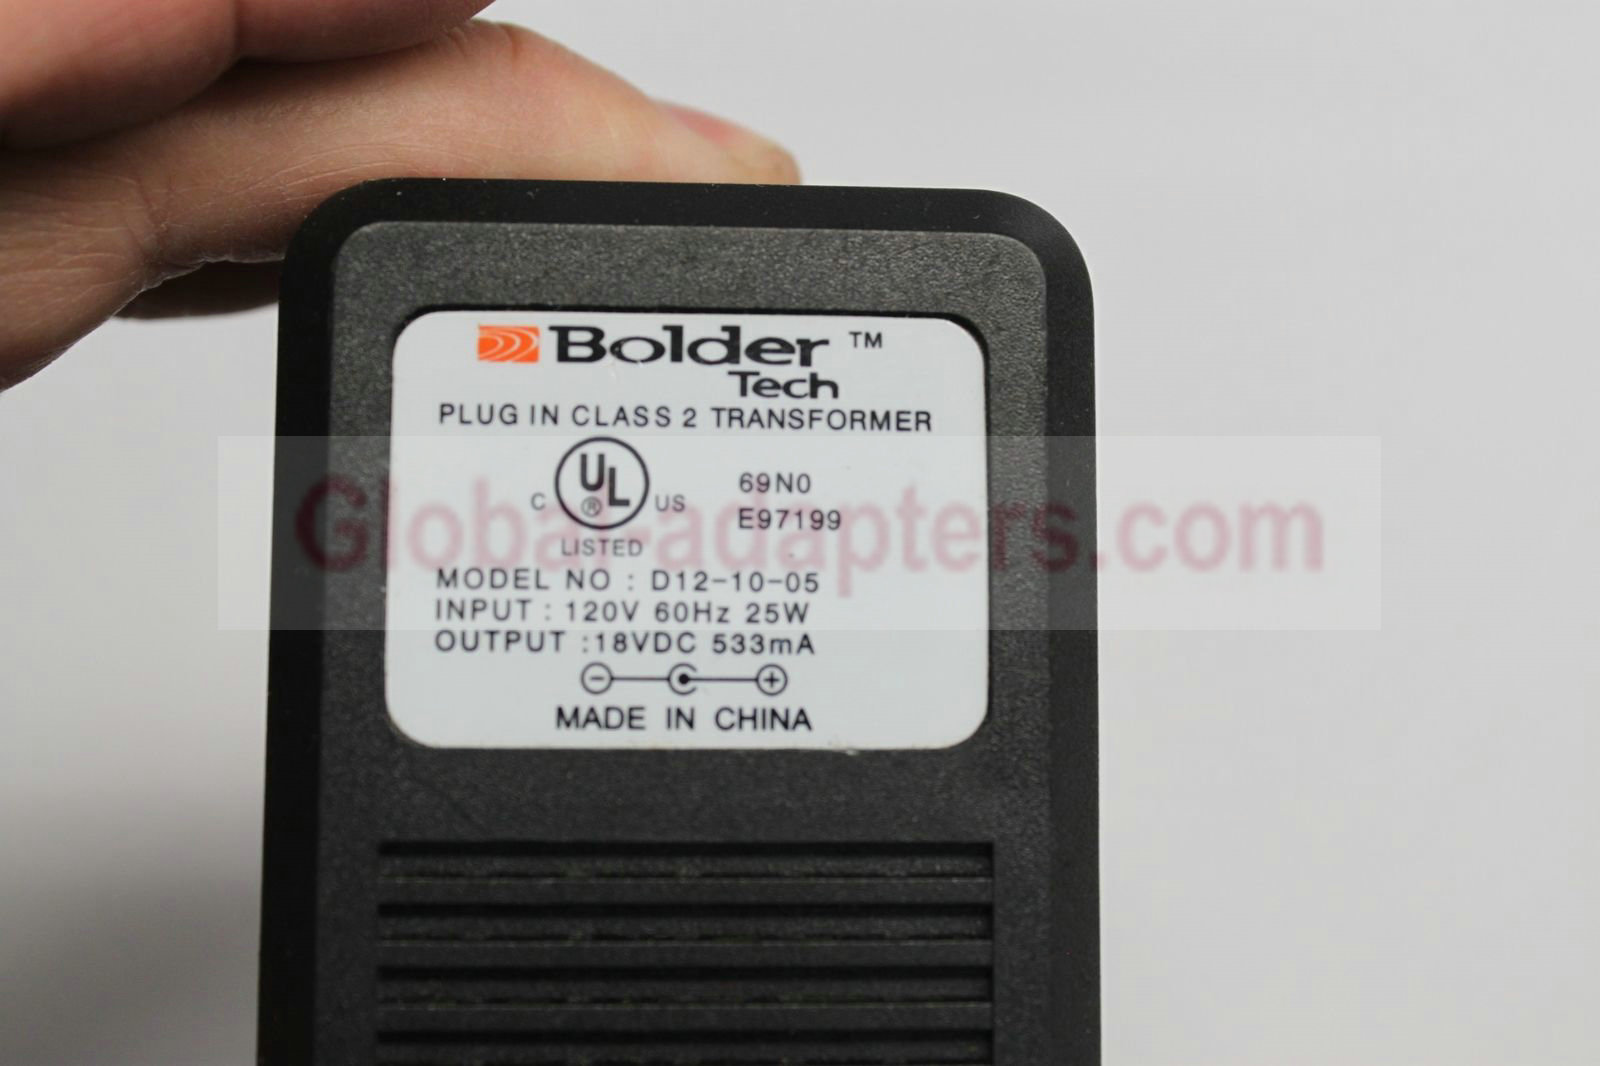 New 18V 533mA Bolder Tech D12-10-05 Plug-In Class 2 Transformer Power Supply Ac Adapter